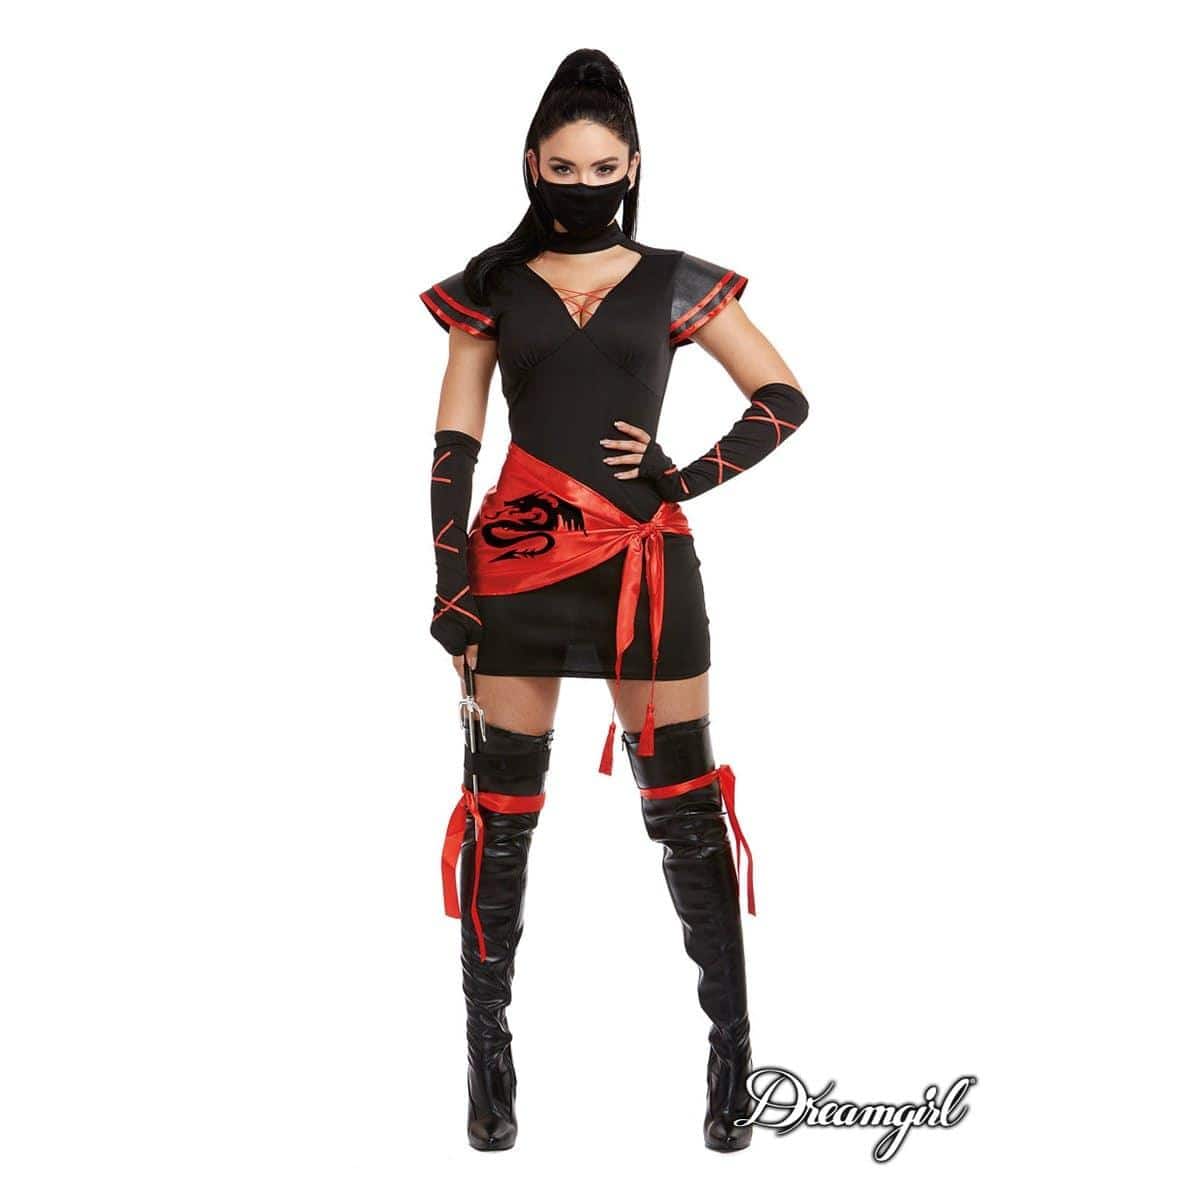 Ninja Costume for Adults